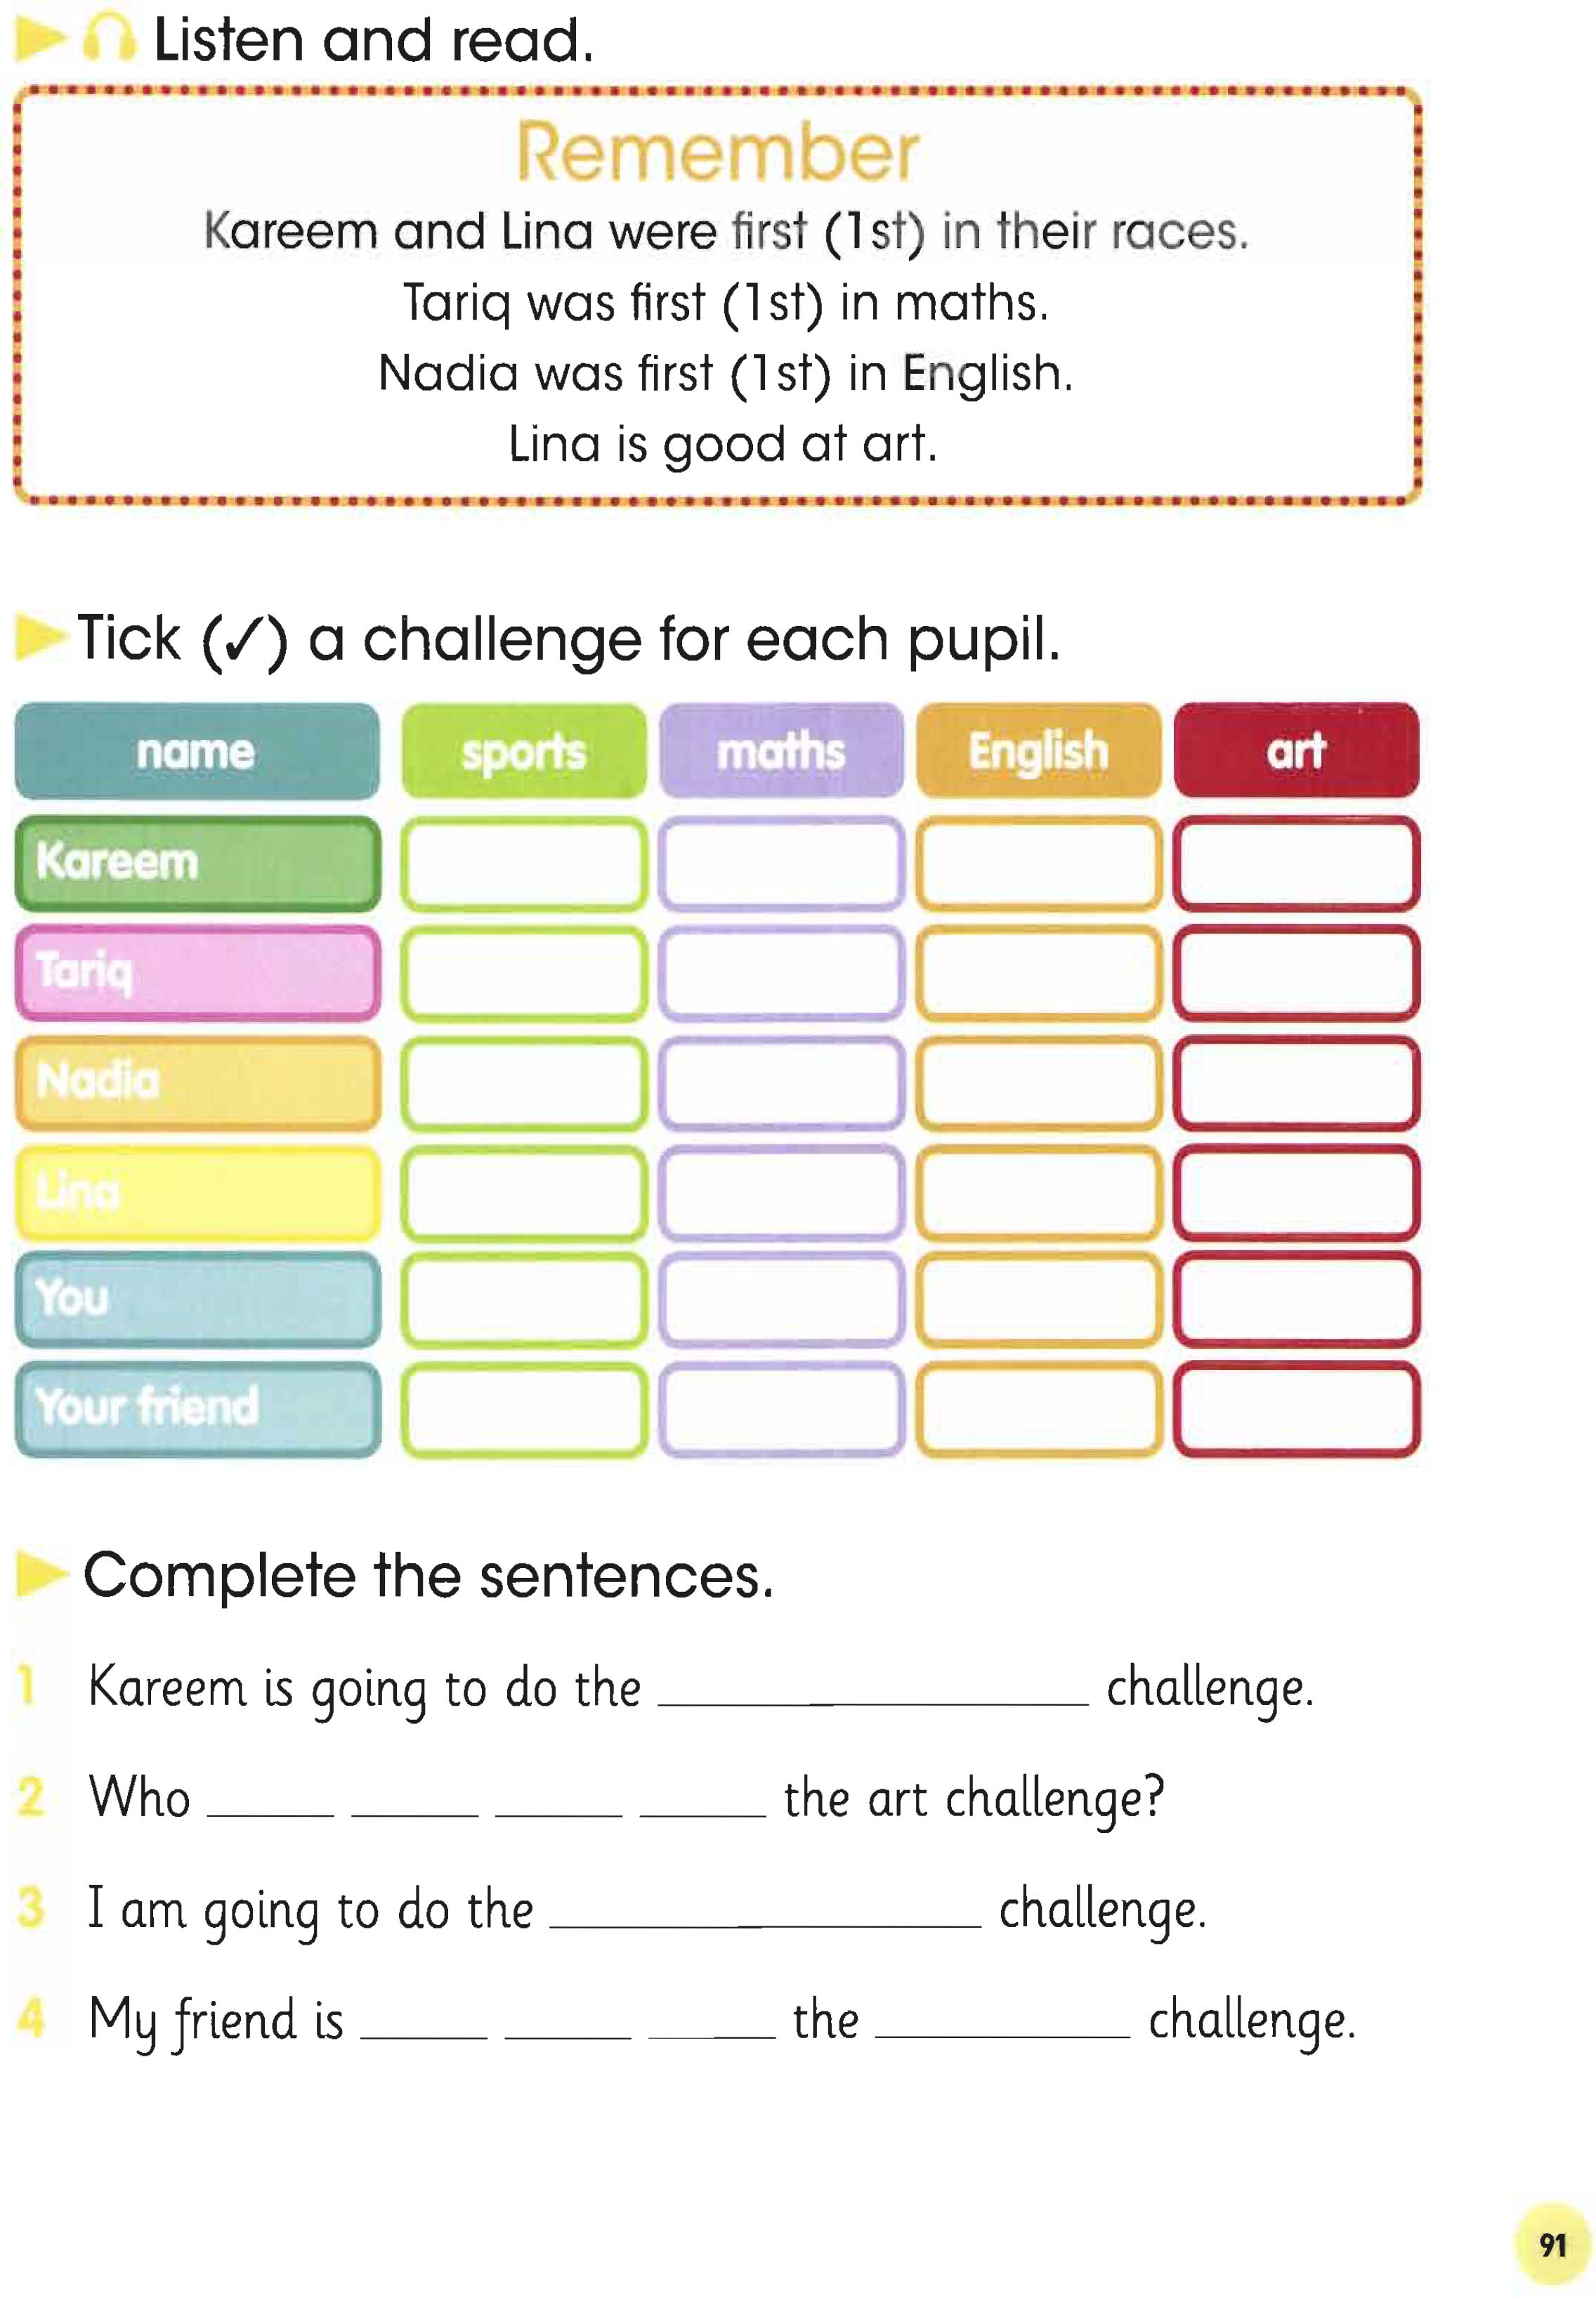 Lesson1:The school challenge